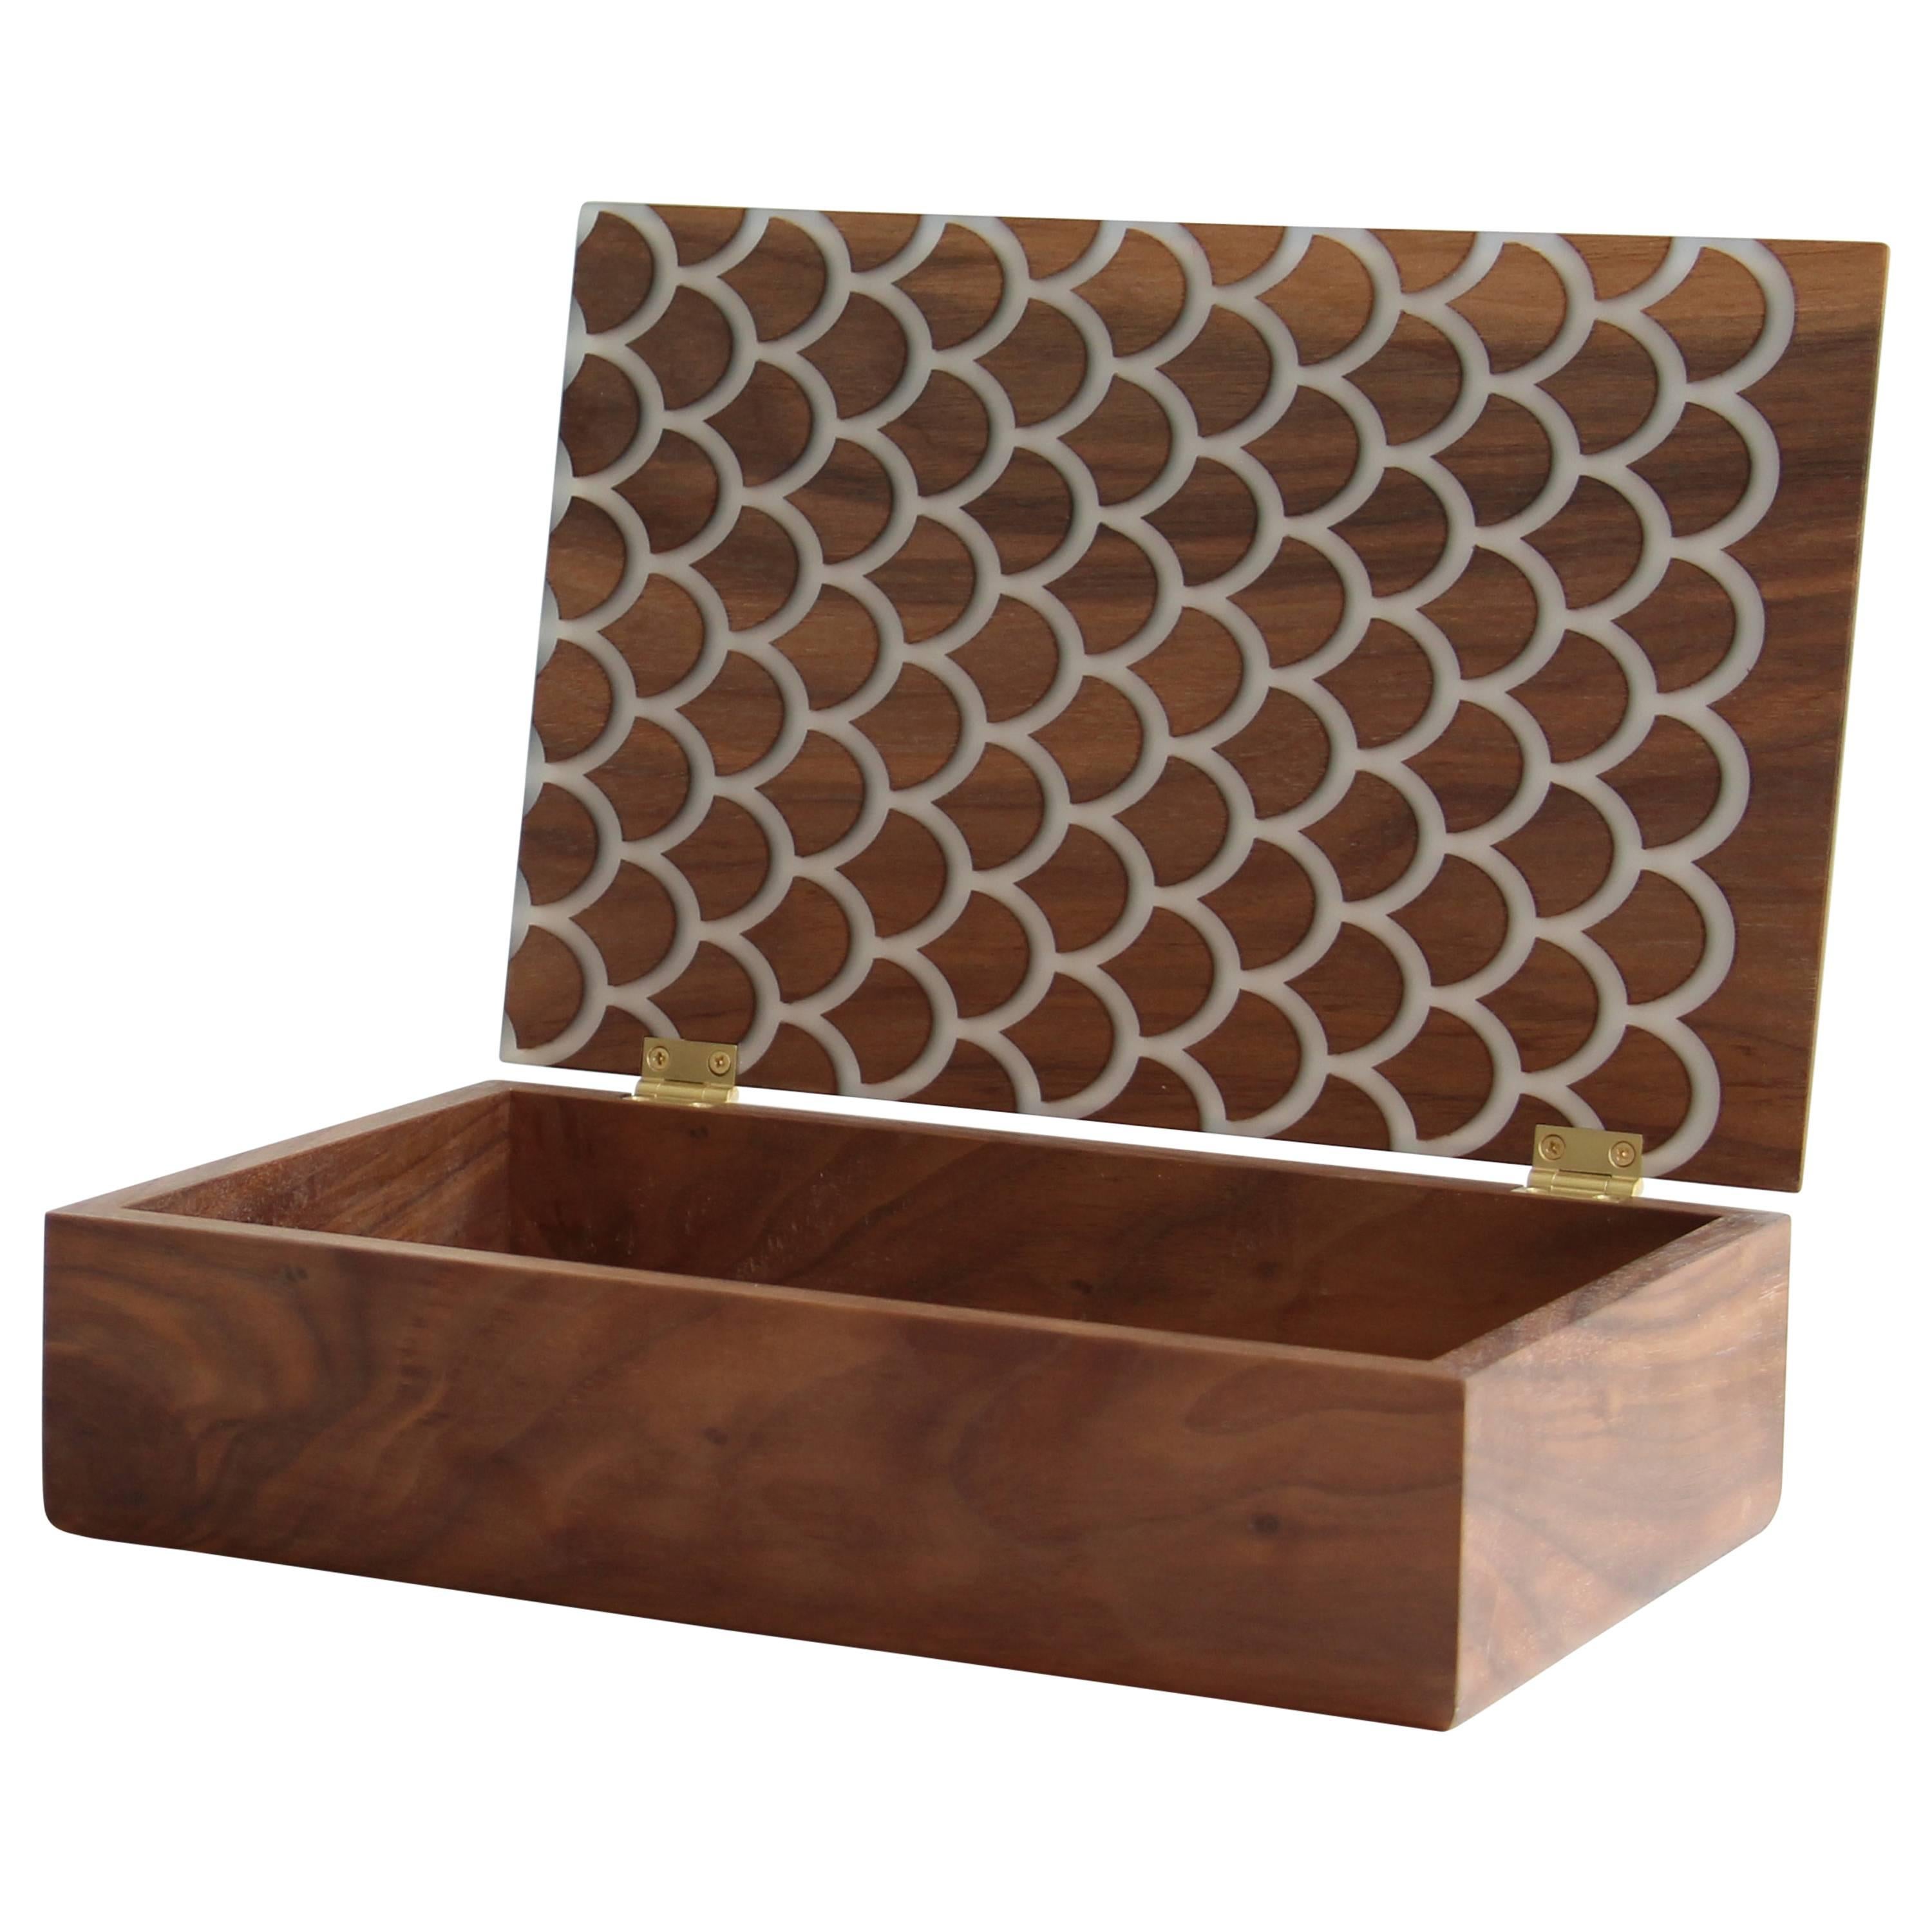 Koi Treasure Box in Walnut with Inlaid Resin - In Stock